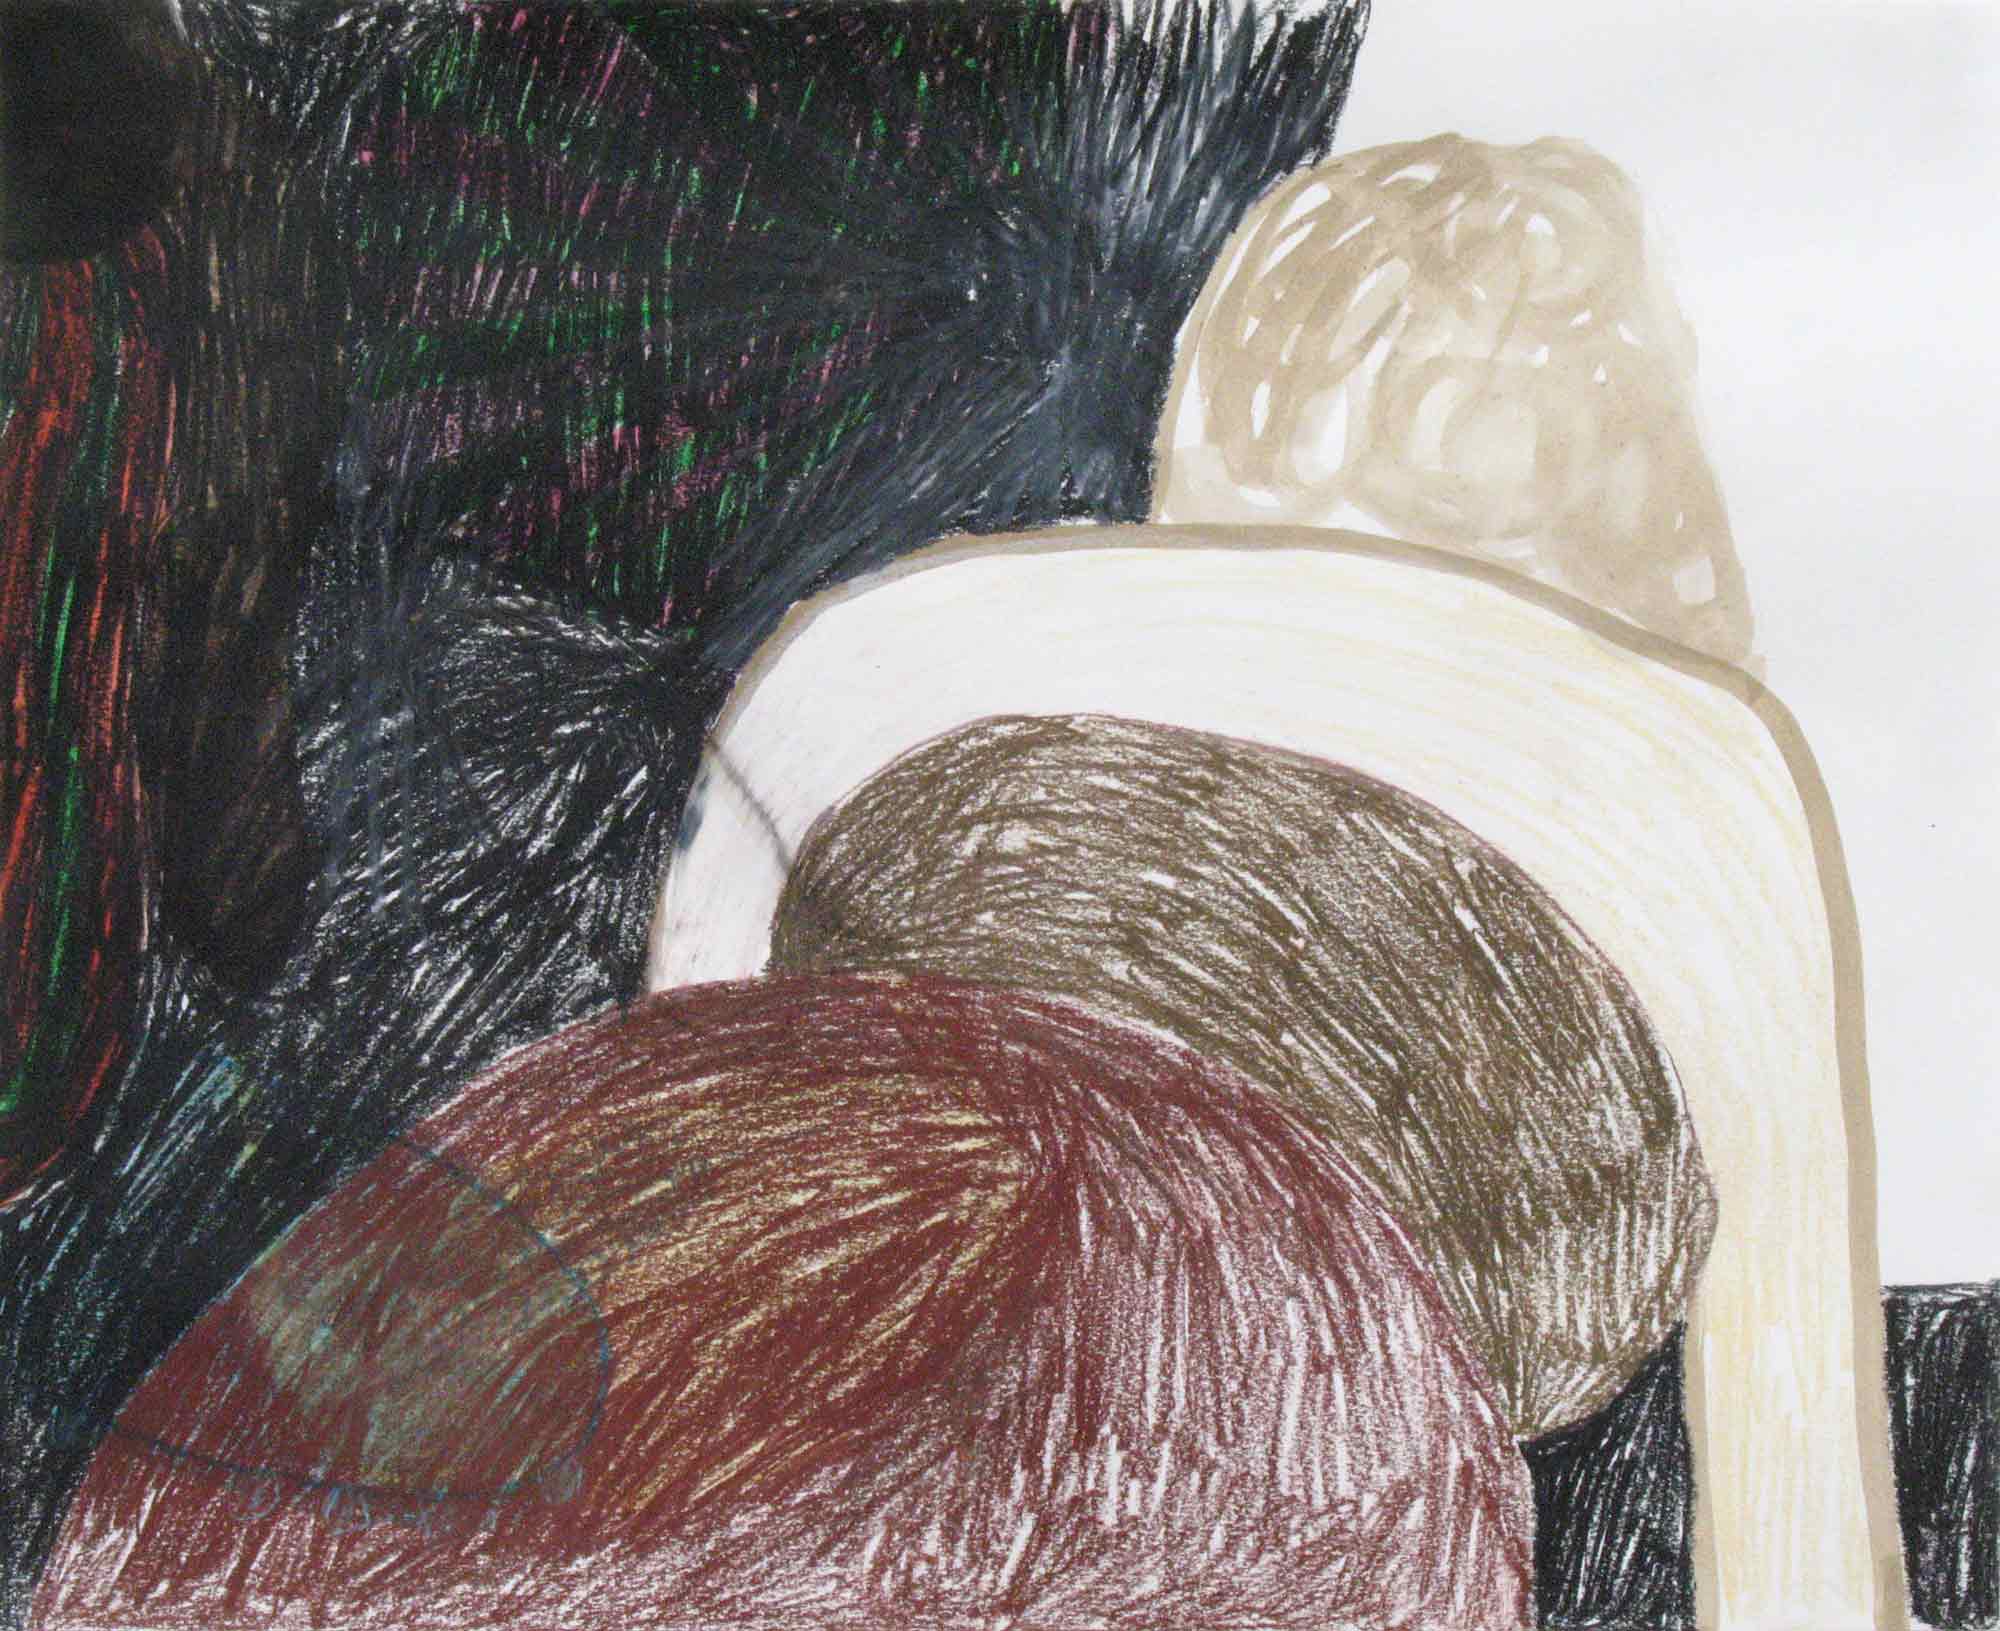  Uit de serie  Korte dagen, lange nachten (Short days, long nights)  potlood, gouache 30 x 36 cm, 2013 